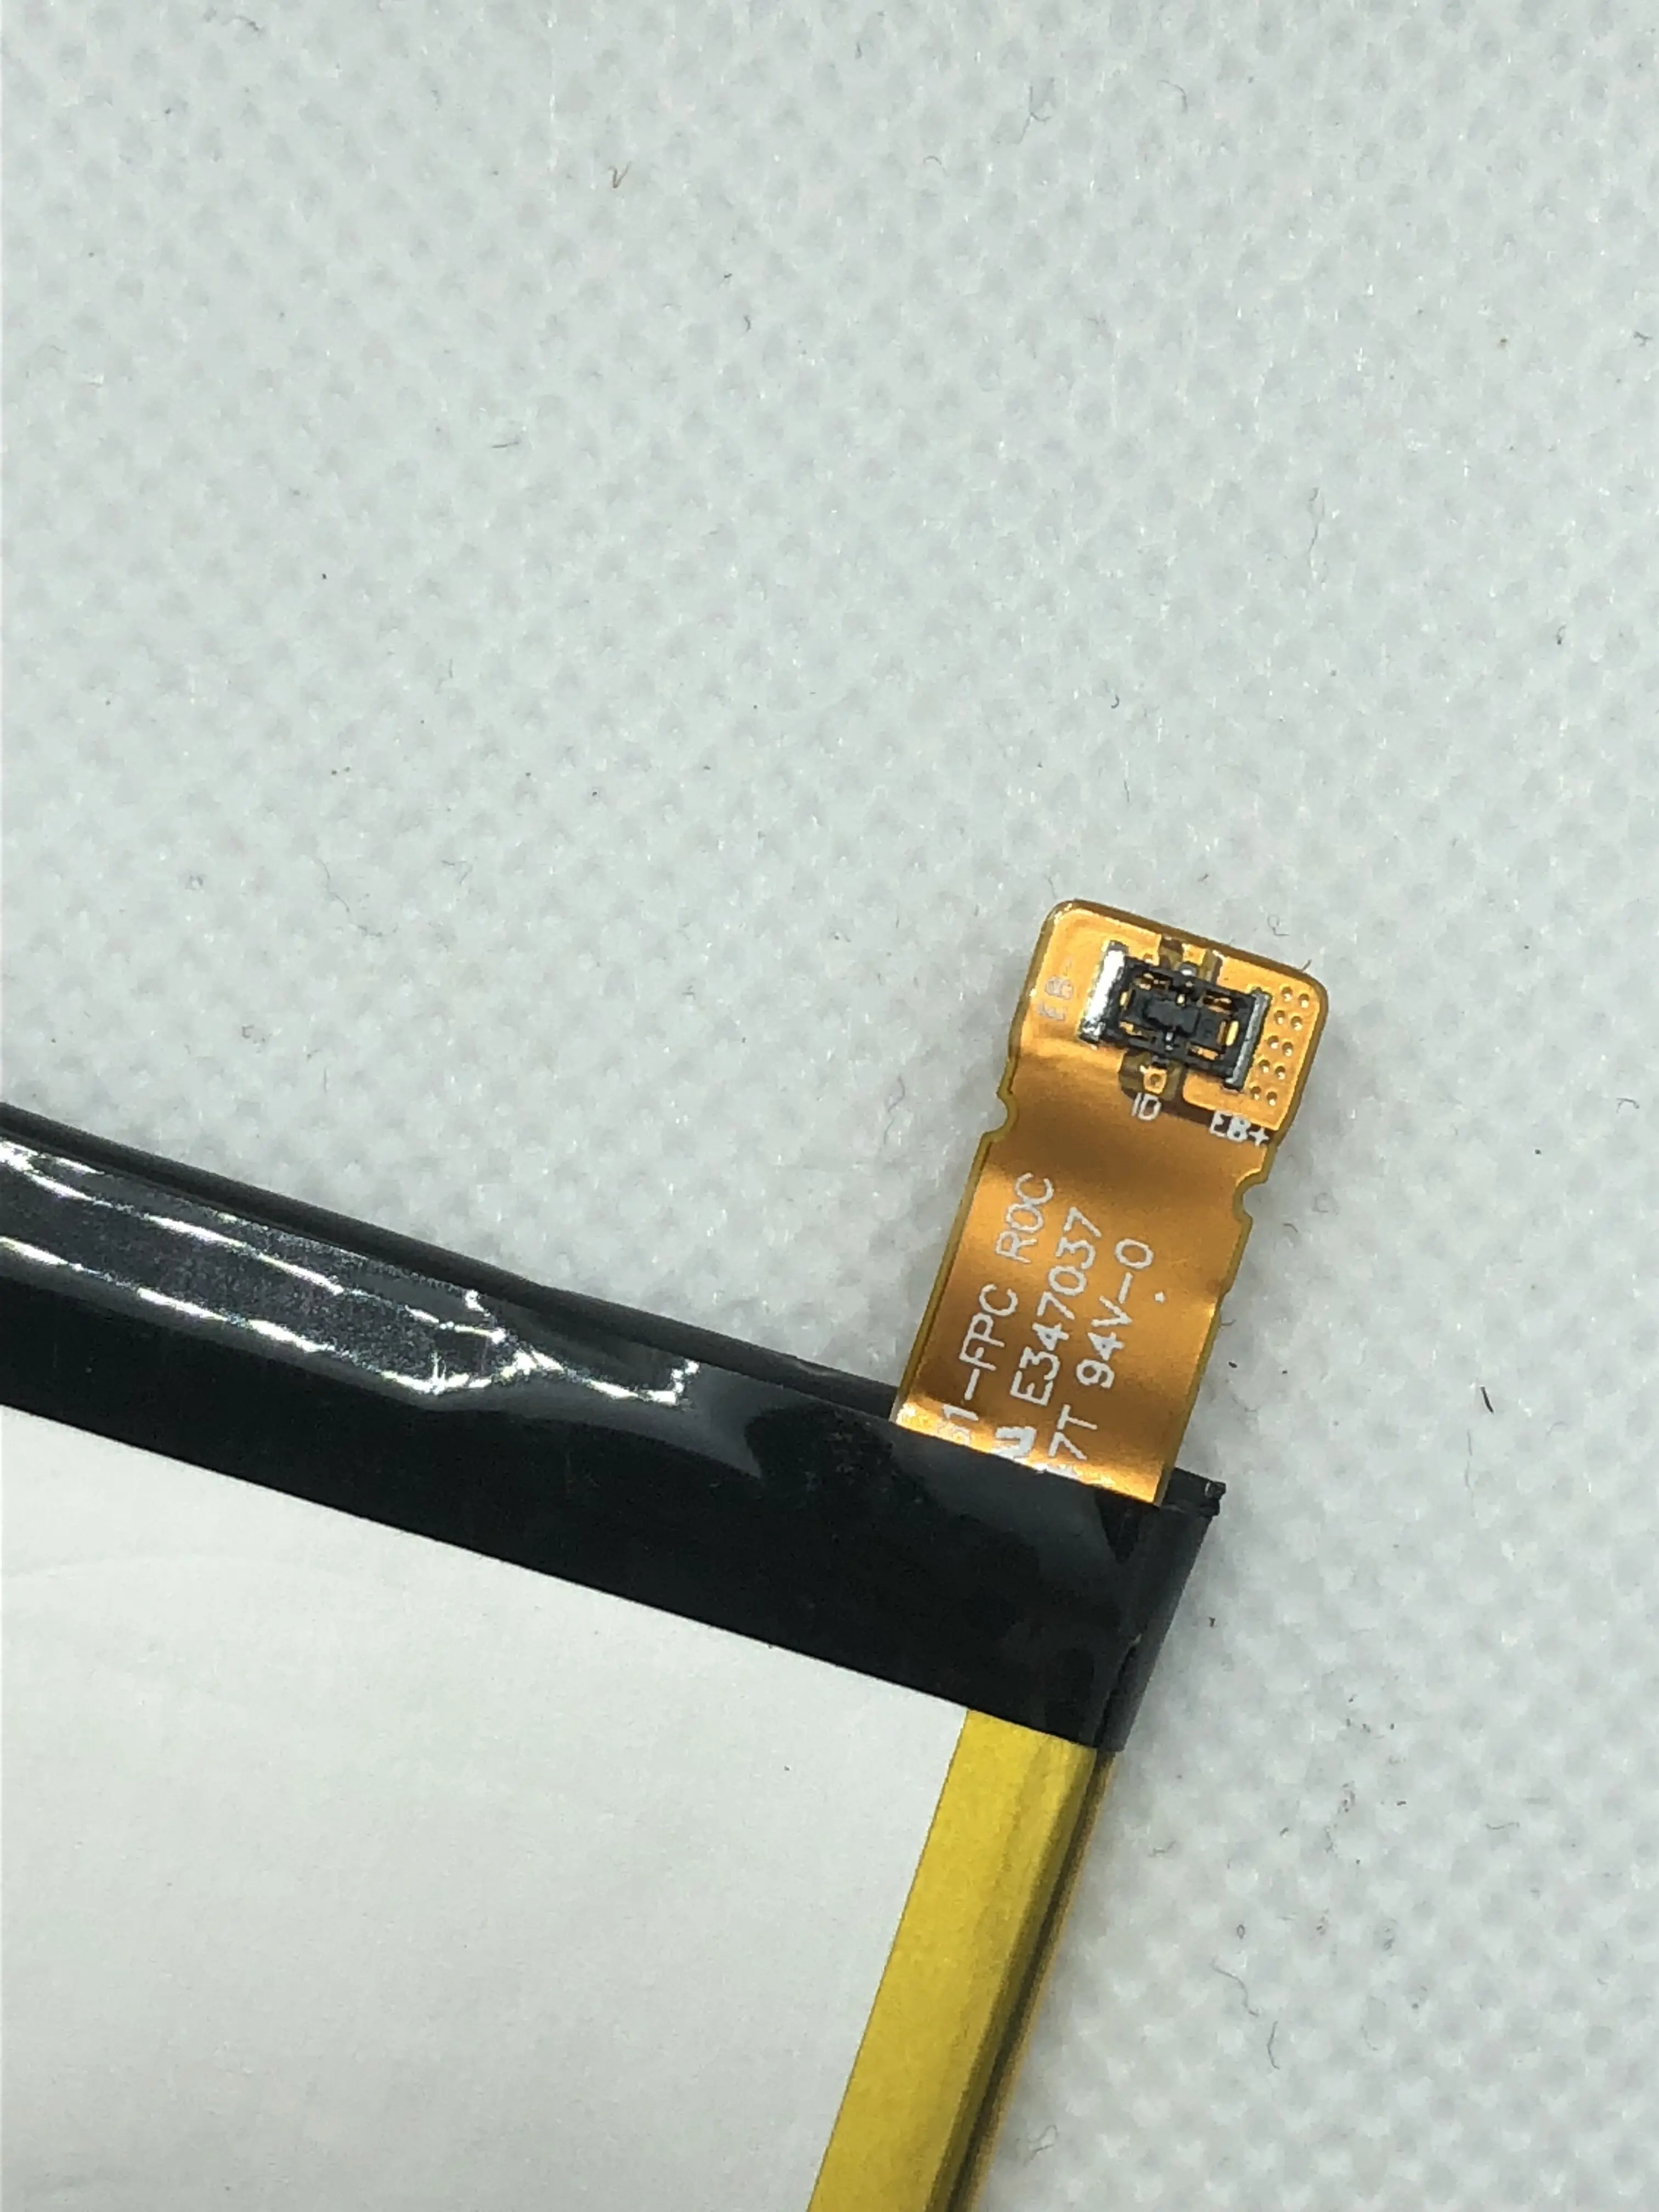 

New 2600mAh LIS1561ERPC Battery For Sony Xperia Z3 Compact Z3c Z3mini D5803 D5833 C4 E5303 E5333 E5363 E5306 + Free Tools